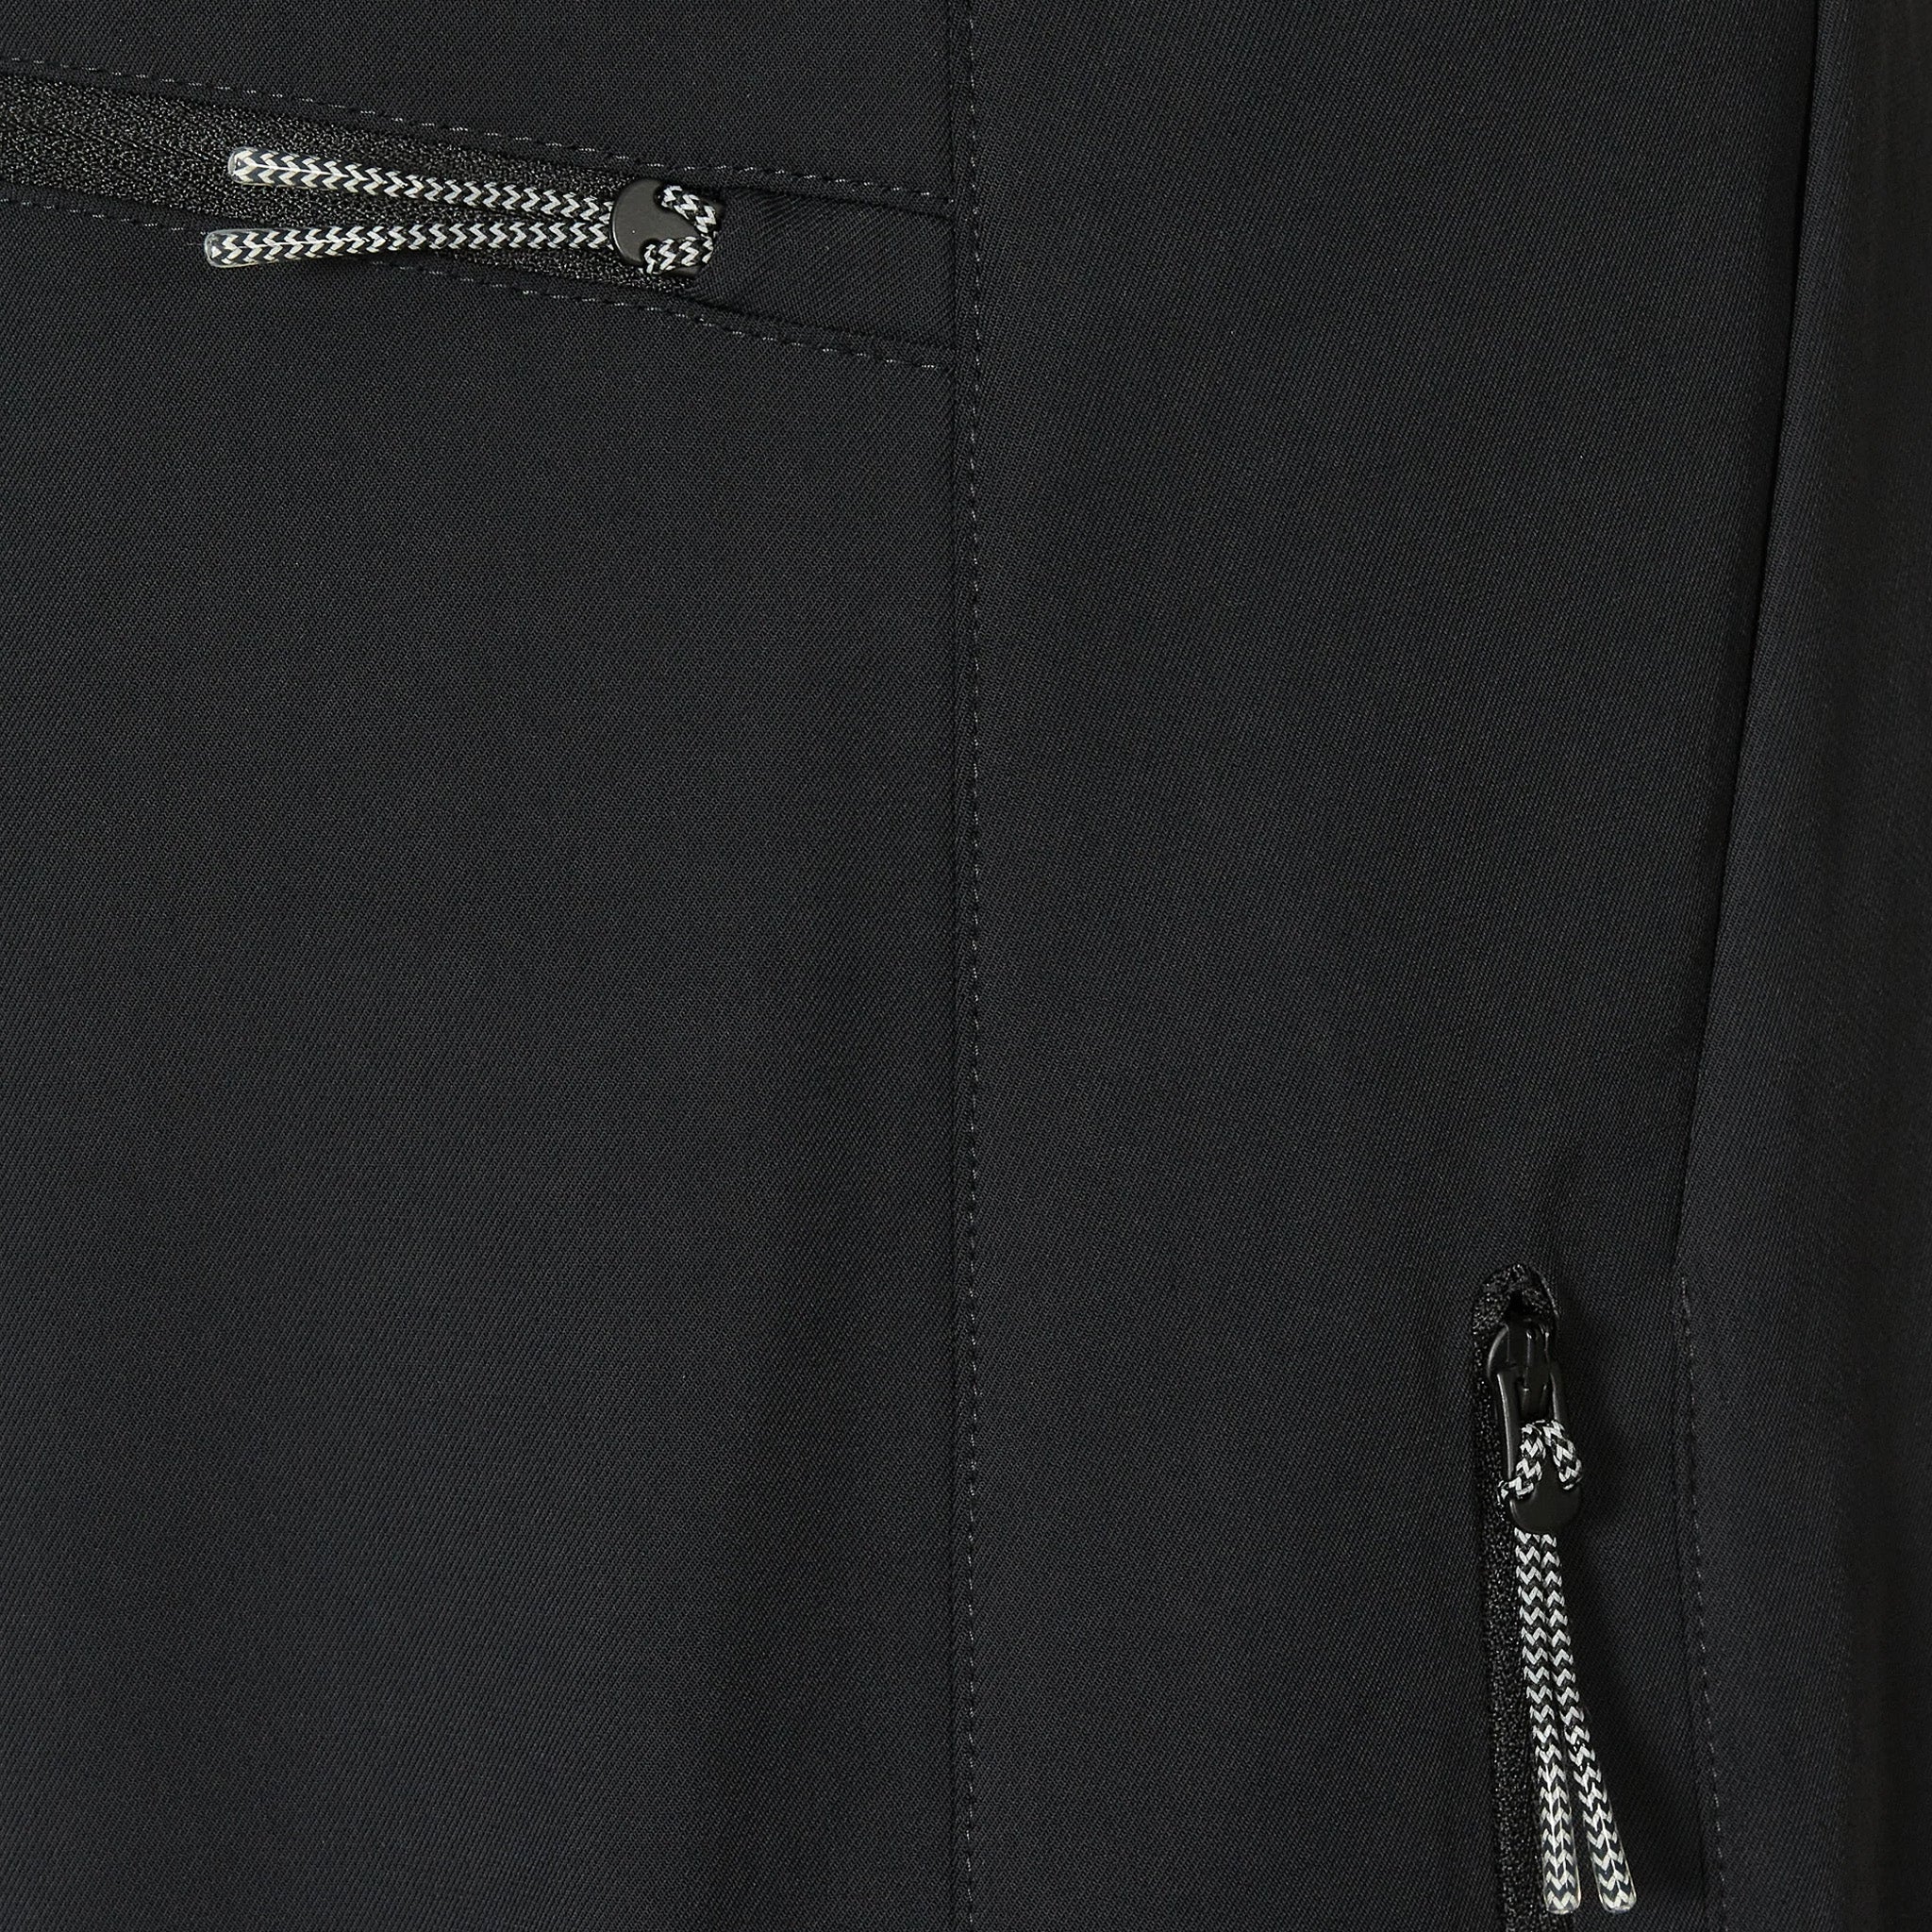 ROA Technical Trousers Softshell (Black) - August Shop